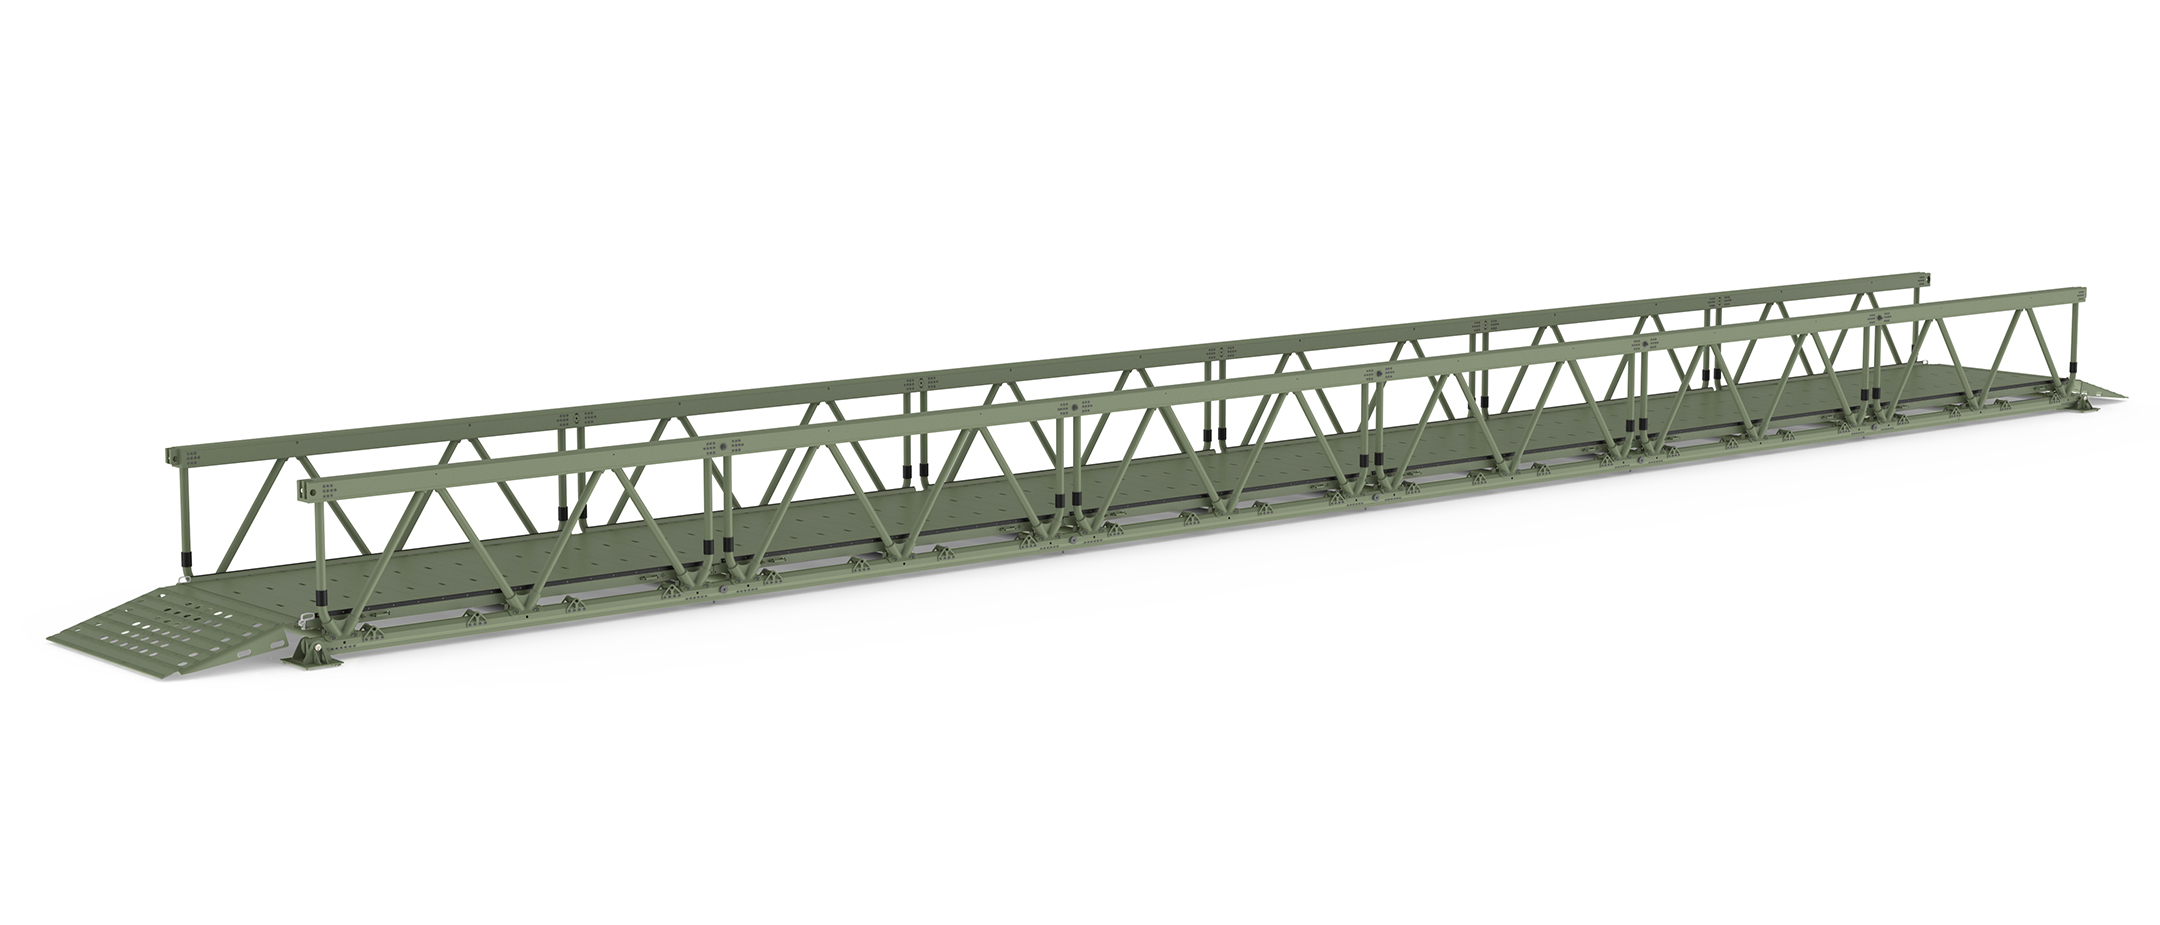 3D rendering of LVTB-2418 modular bridge